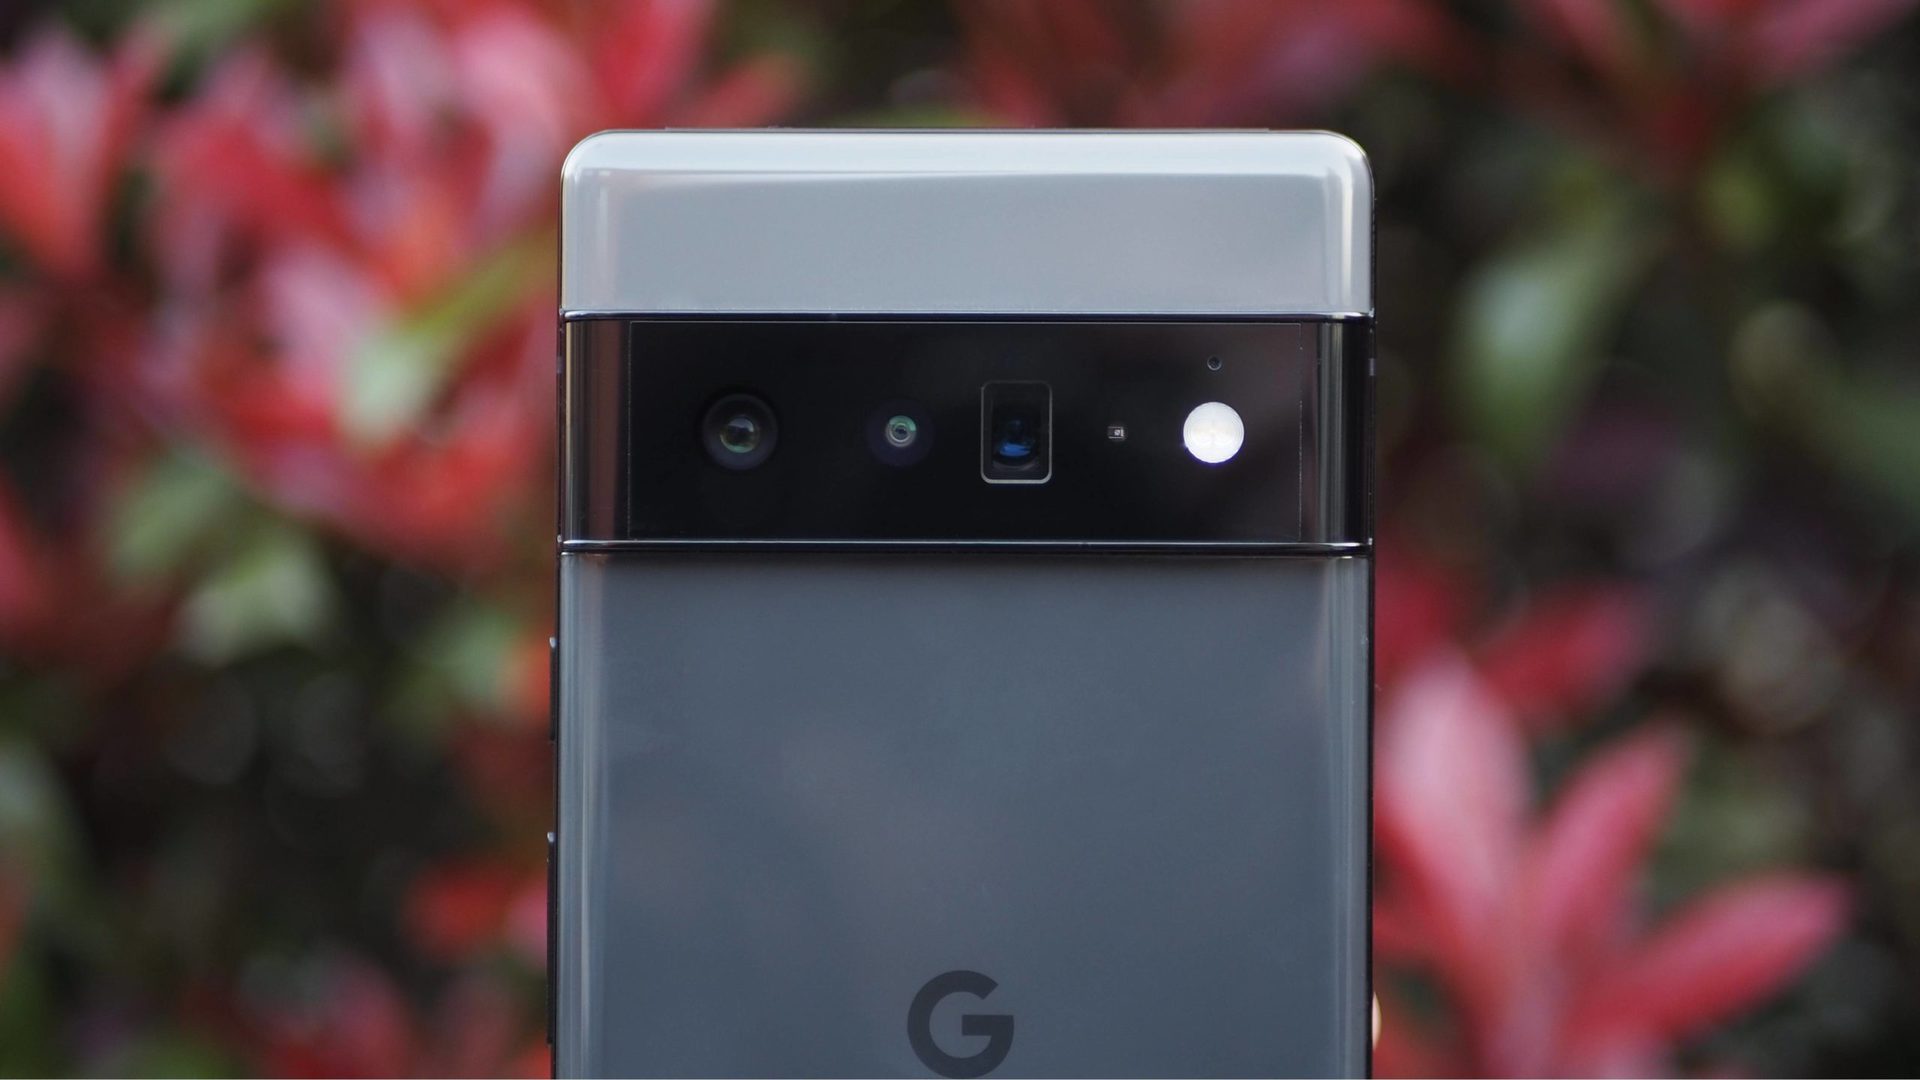 Kamera belakang Google Pixel 6 Pro menabrak close-up dengan tanaman merah di latar belakang